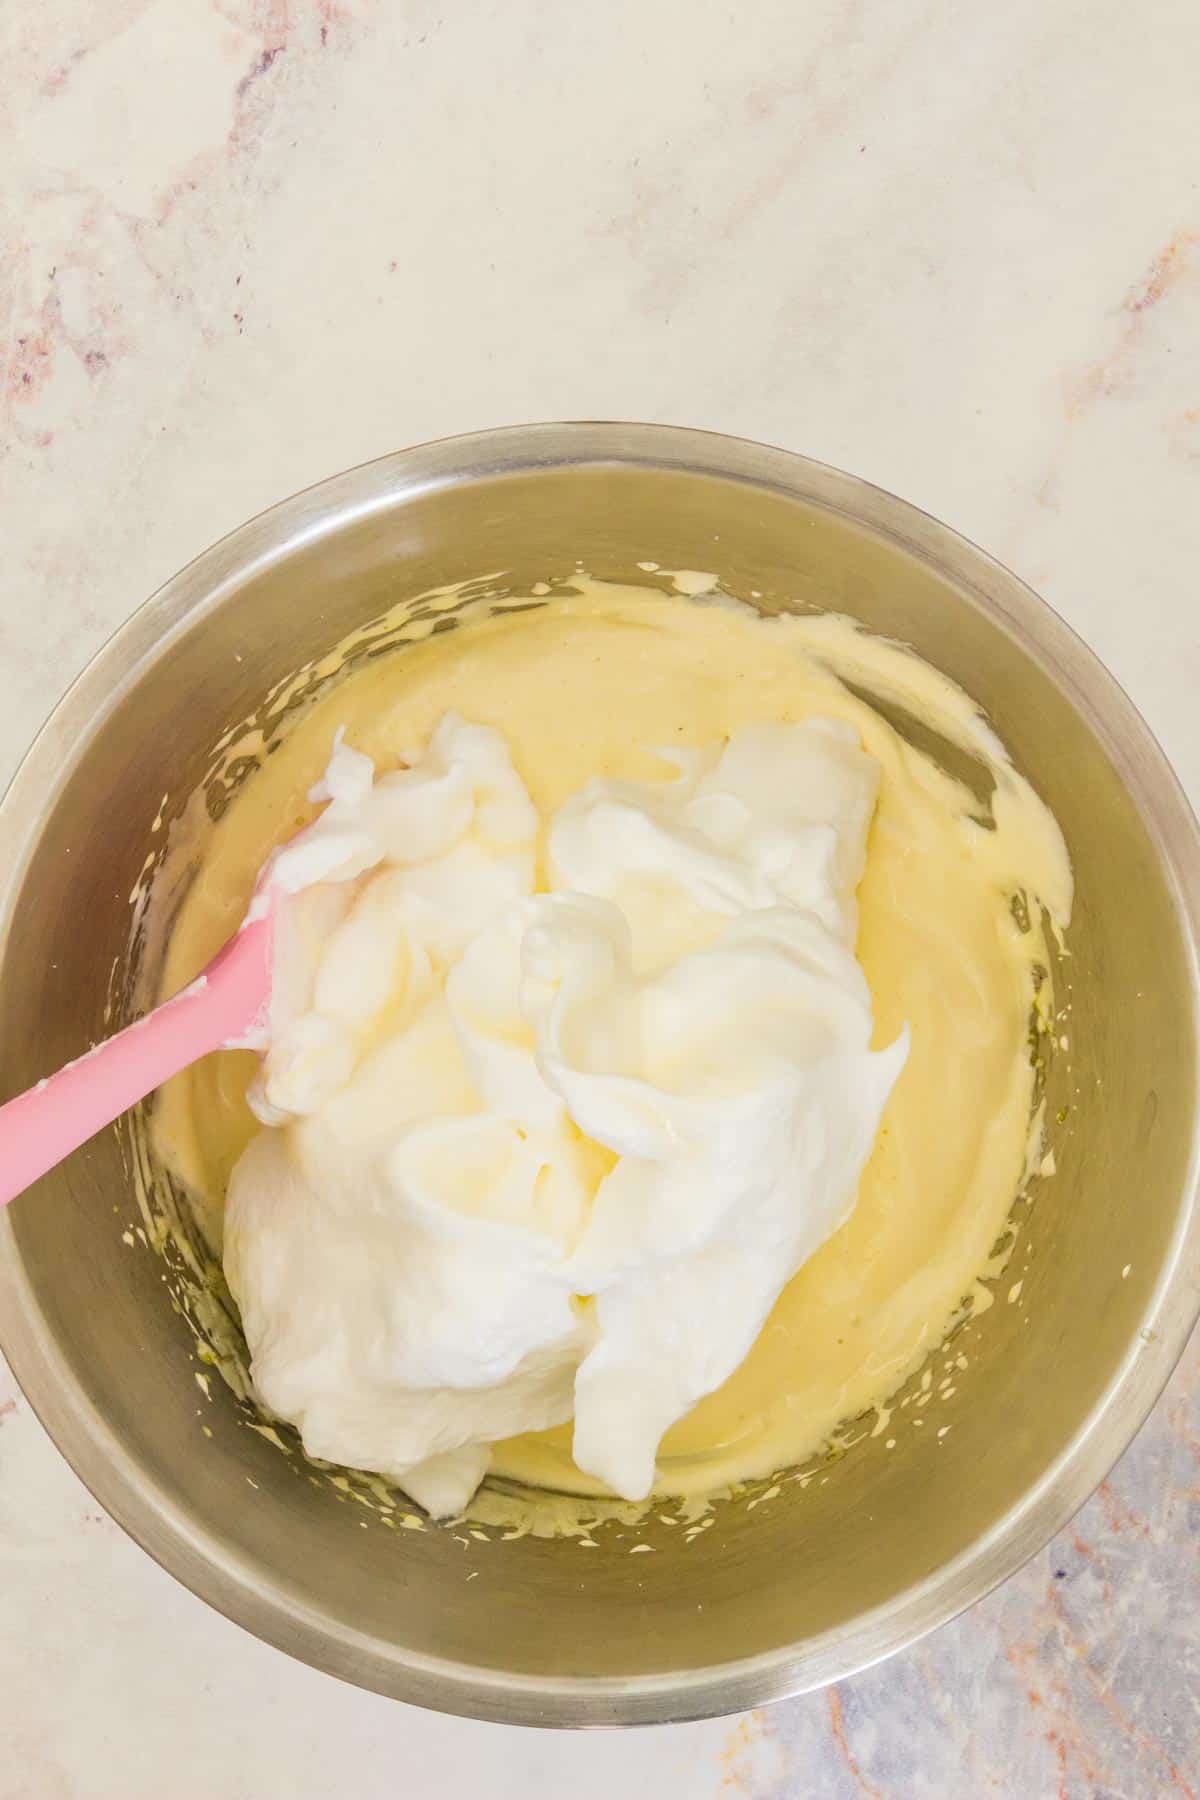 Meringue is folded into the beaten egg yolk mixture for gluten free ladyfinger batter.